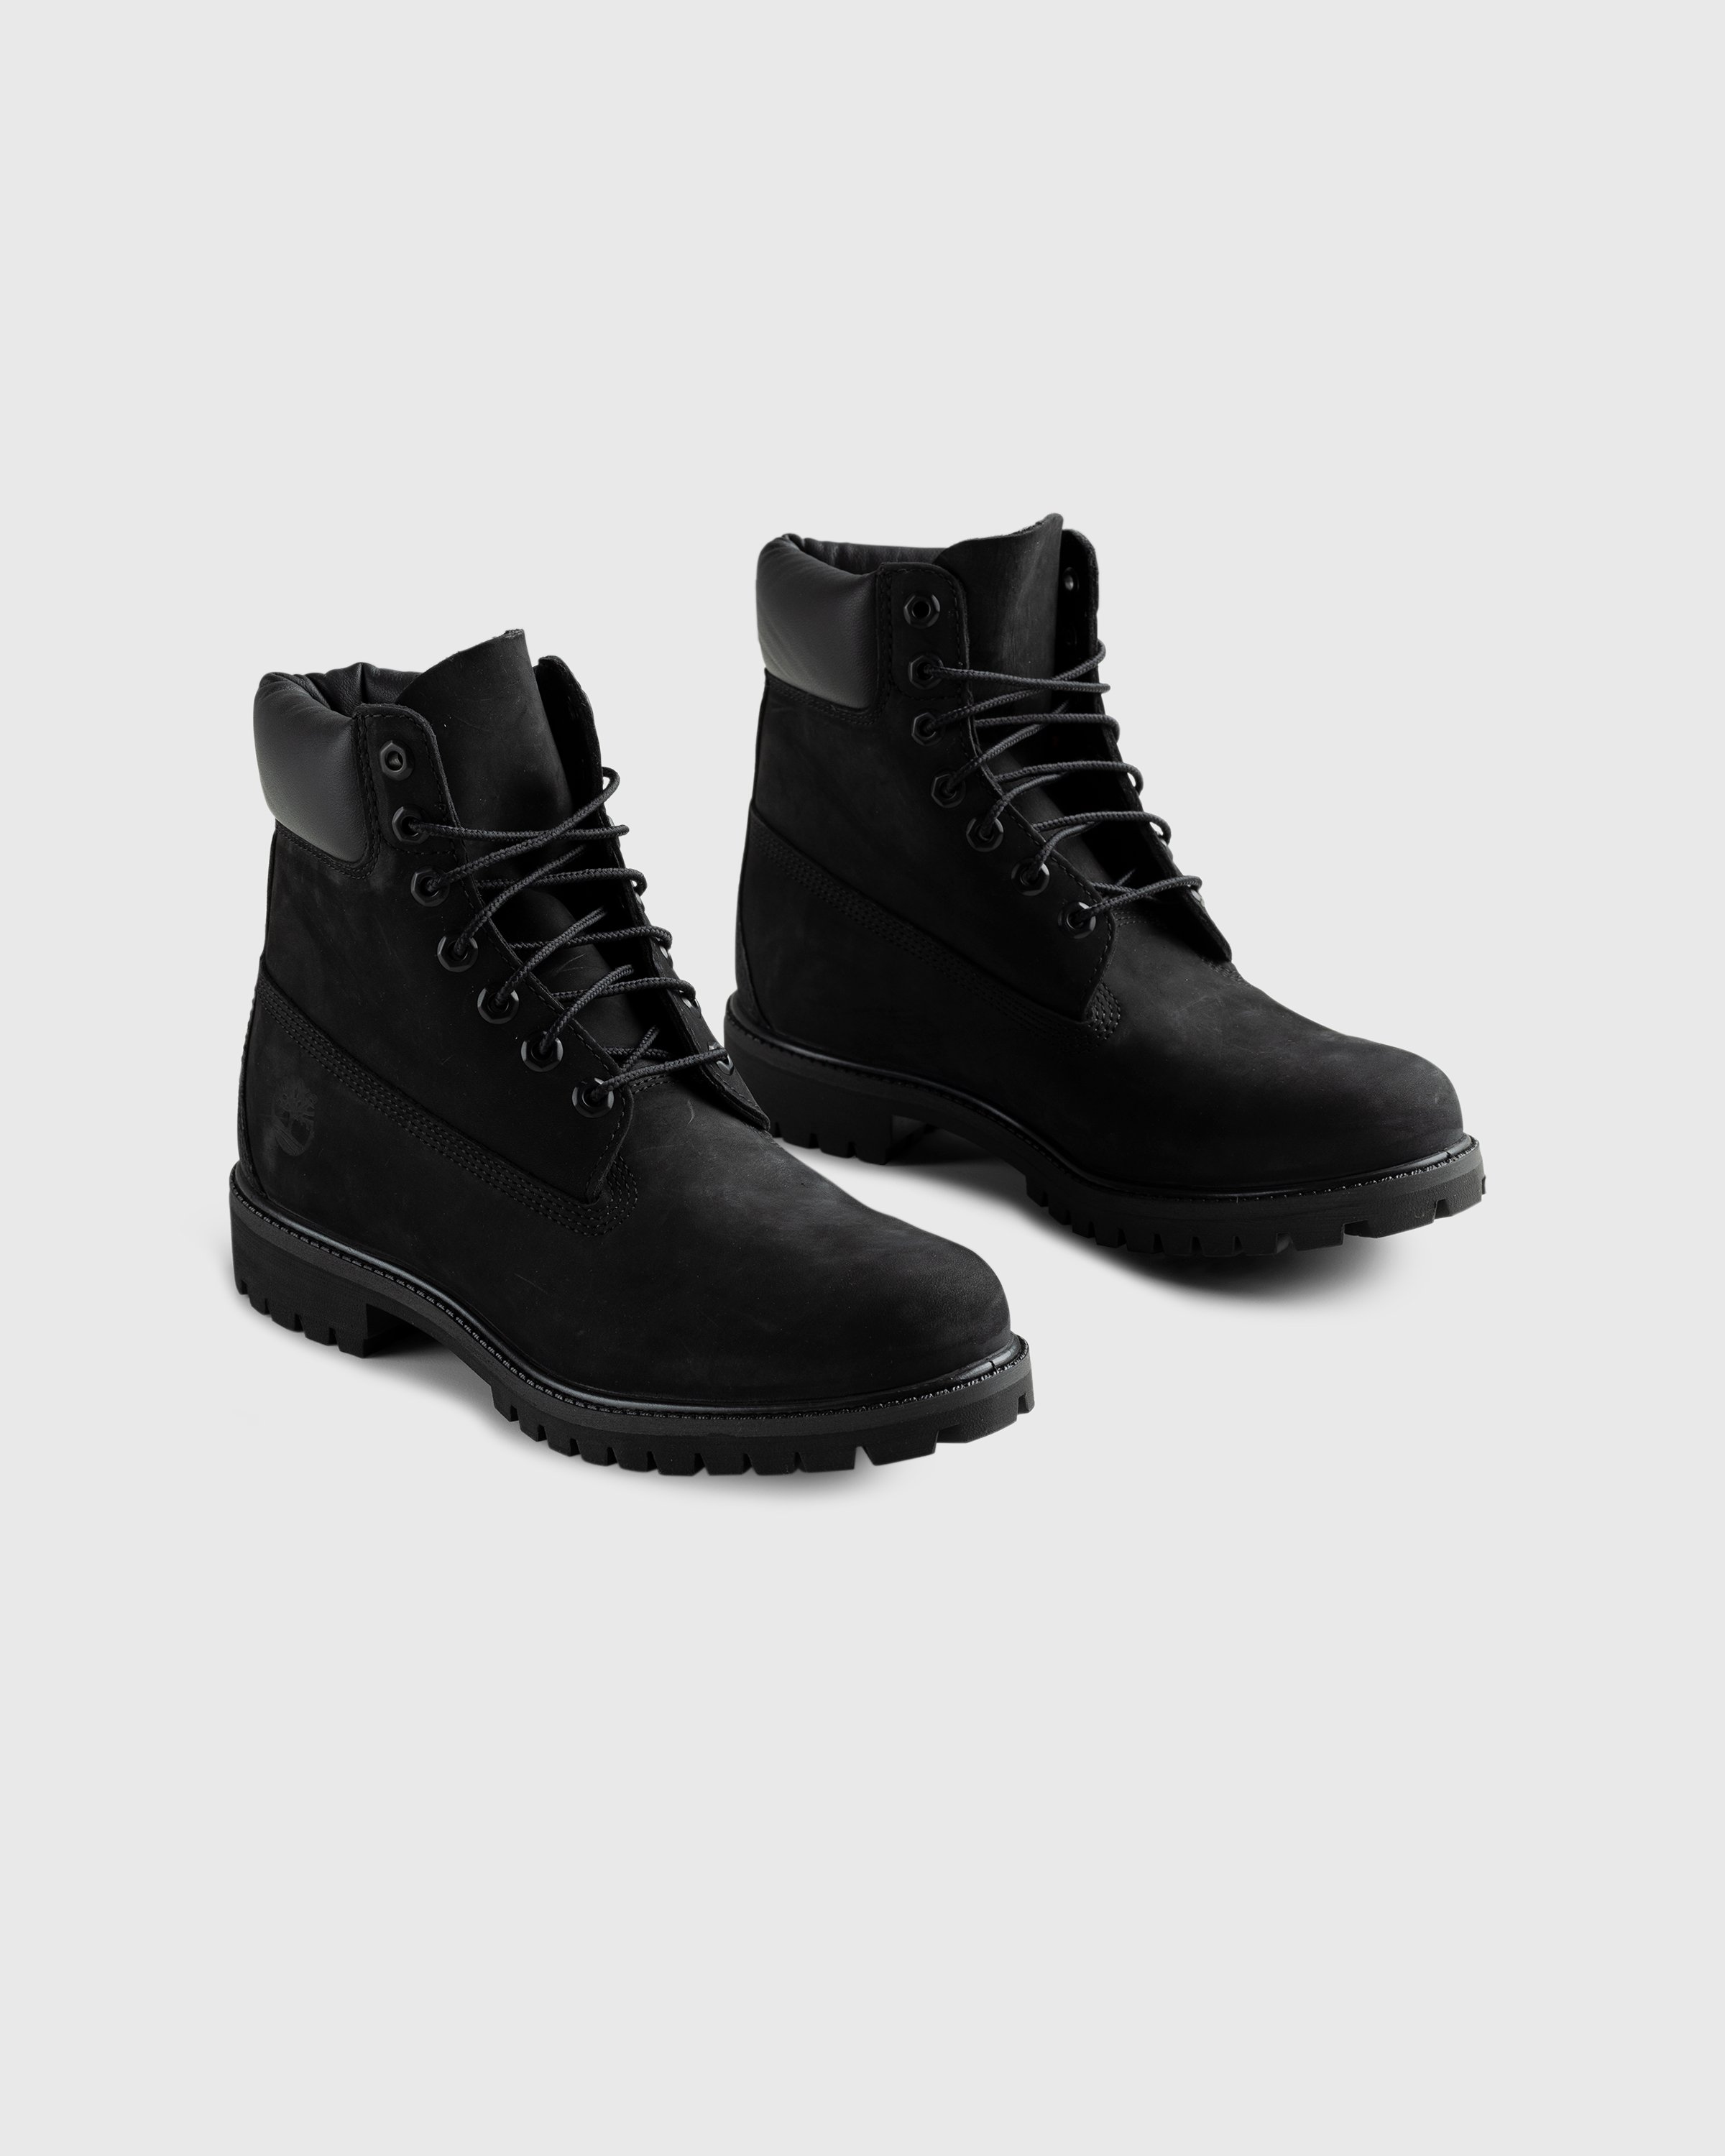 Timberland - 6 Inch Premium Boot Black - Footwear - Black - Image 3